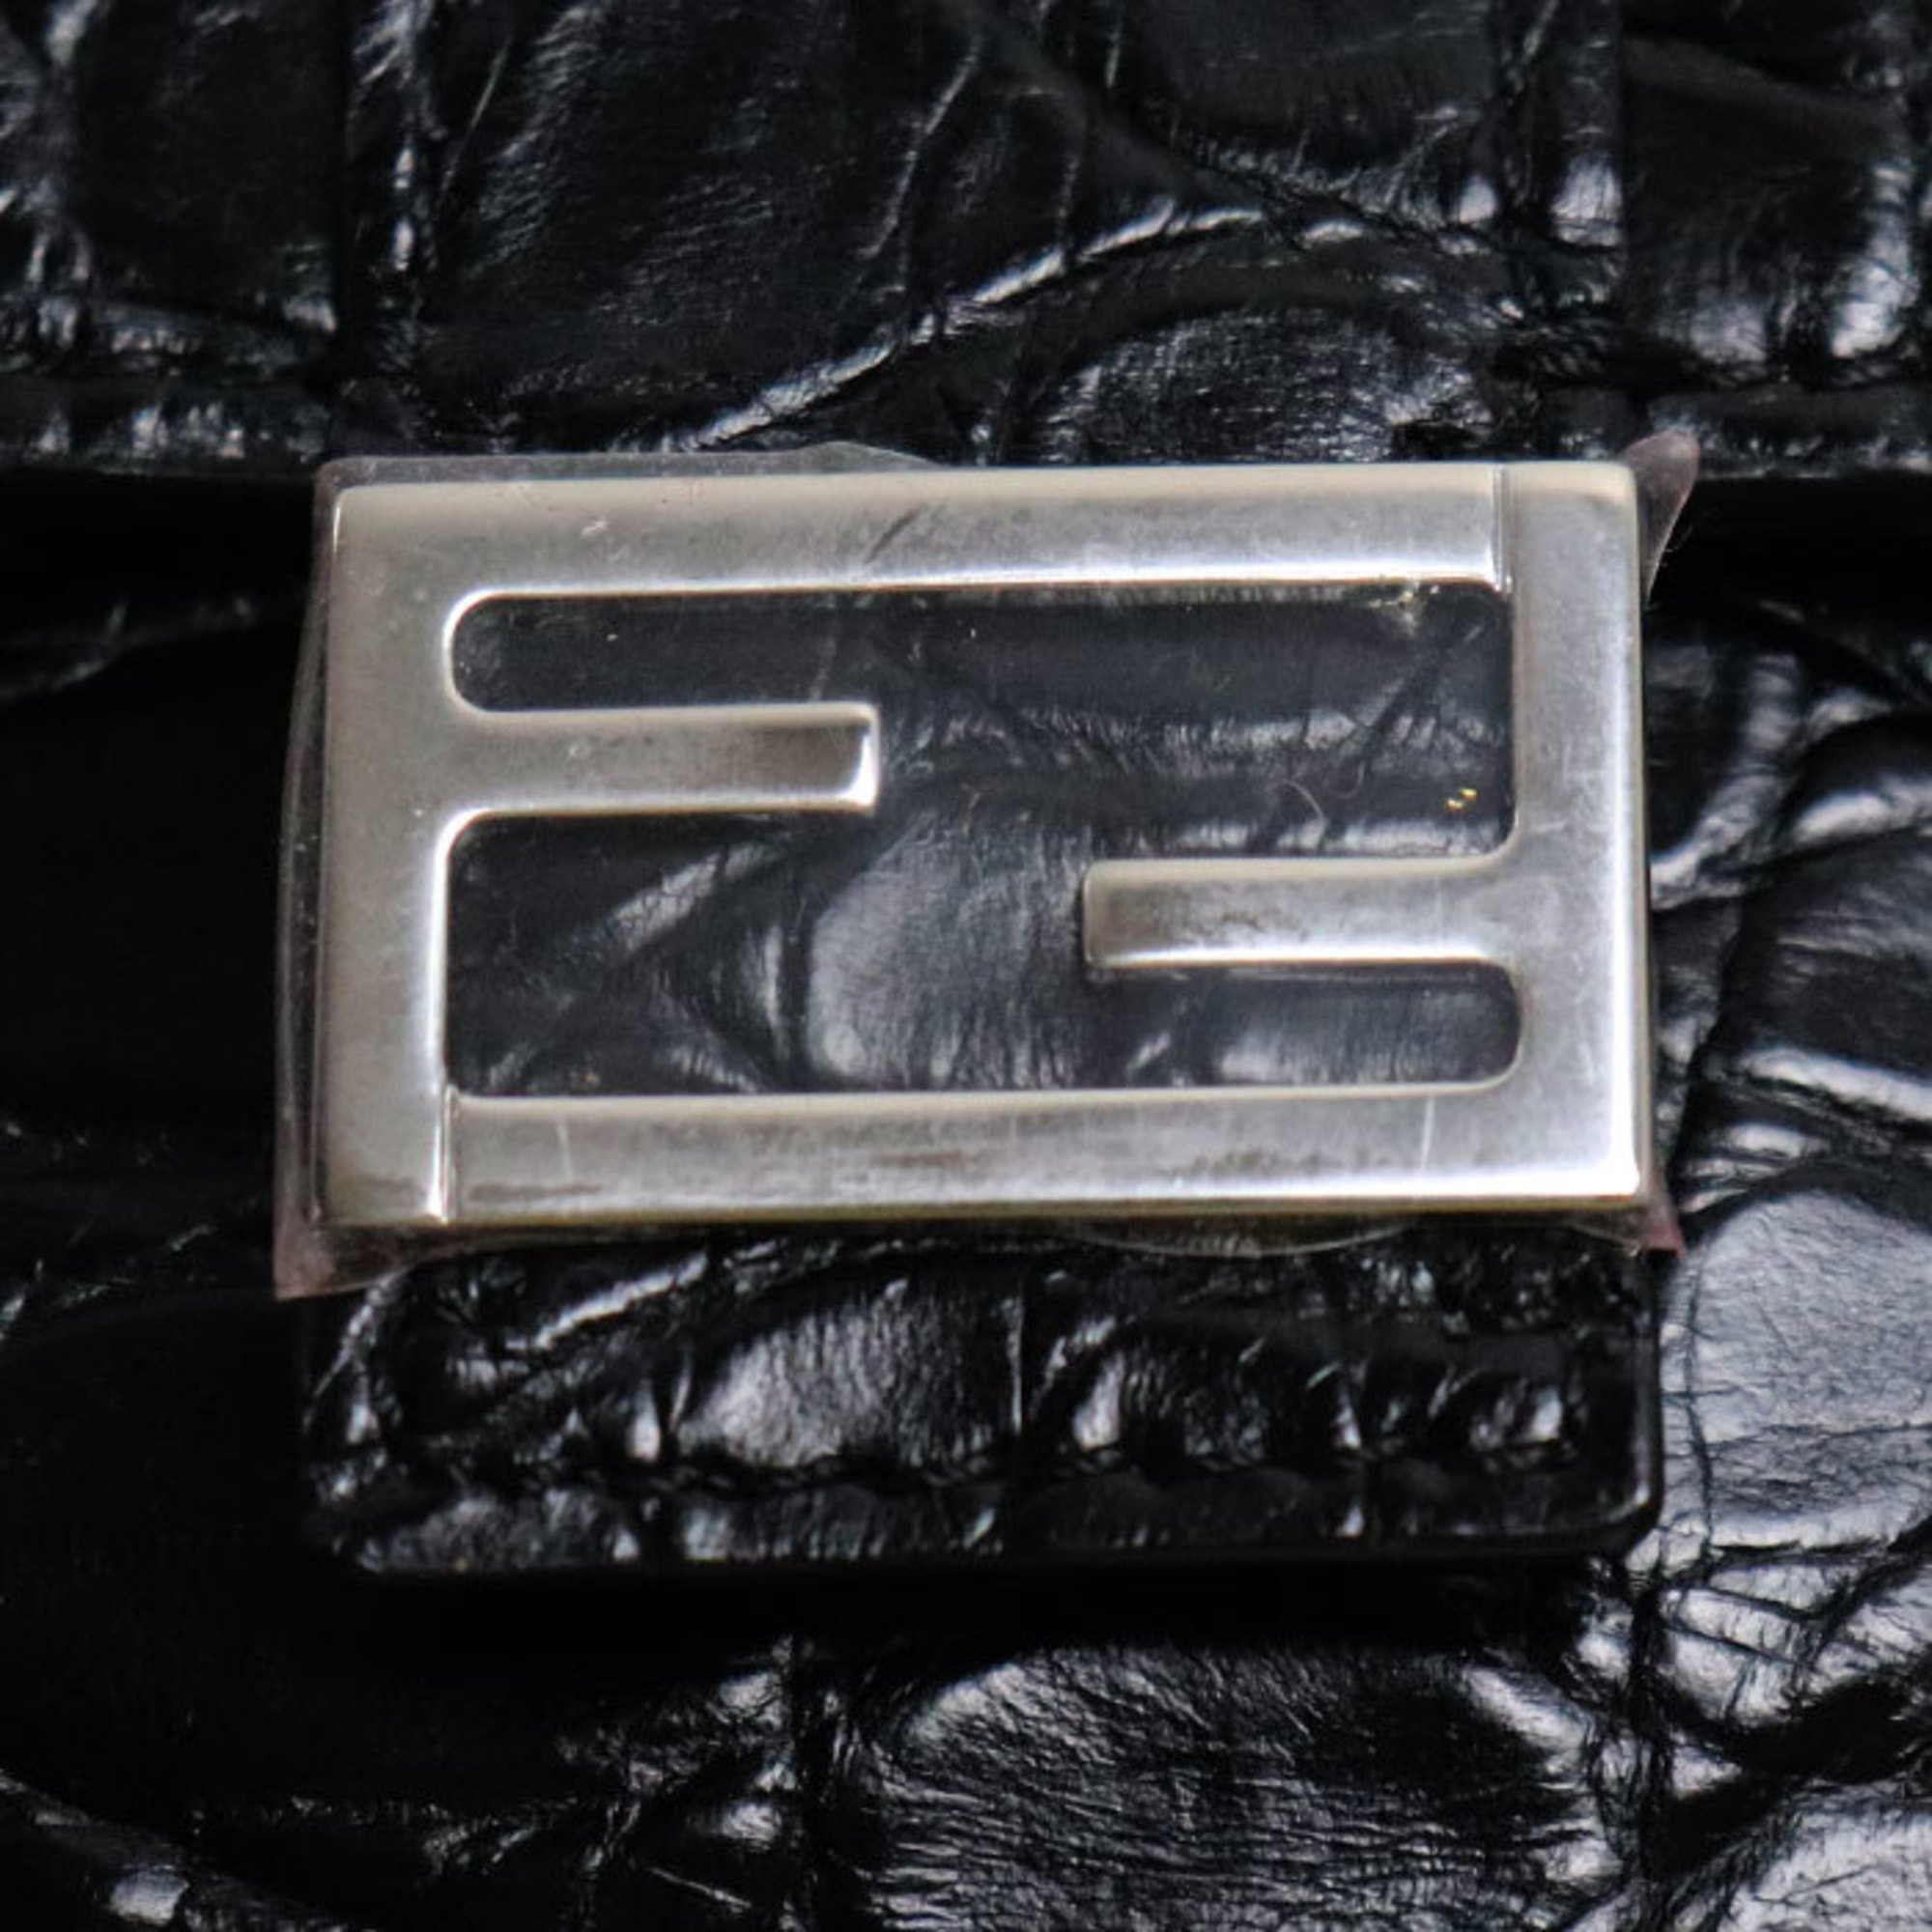 Fendi 7M0311AD1NF0GXN Leather Card Case Black